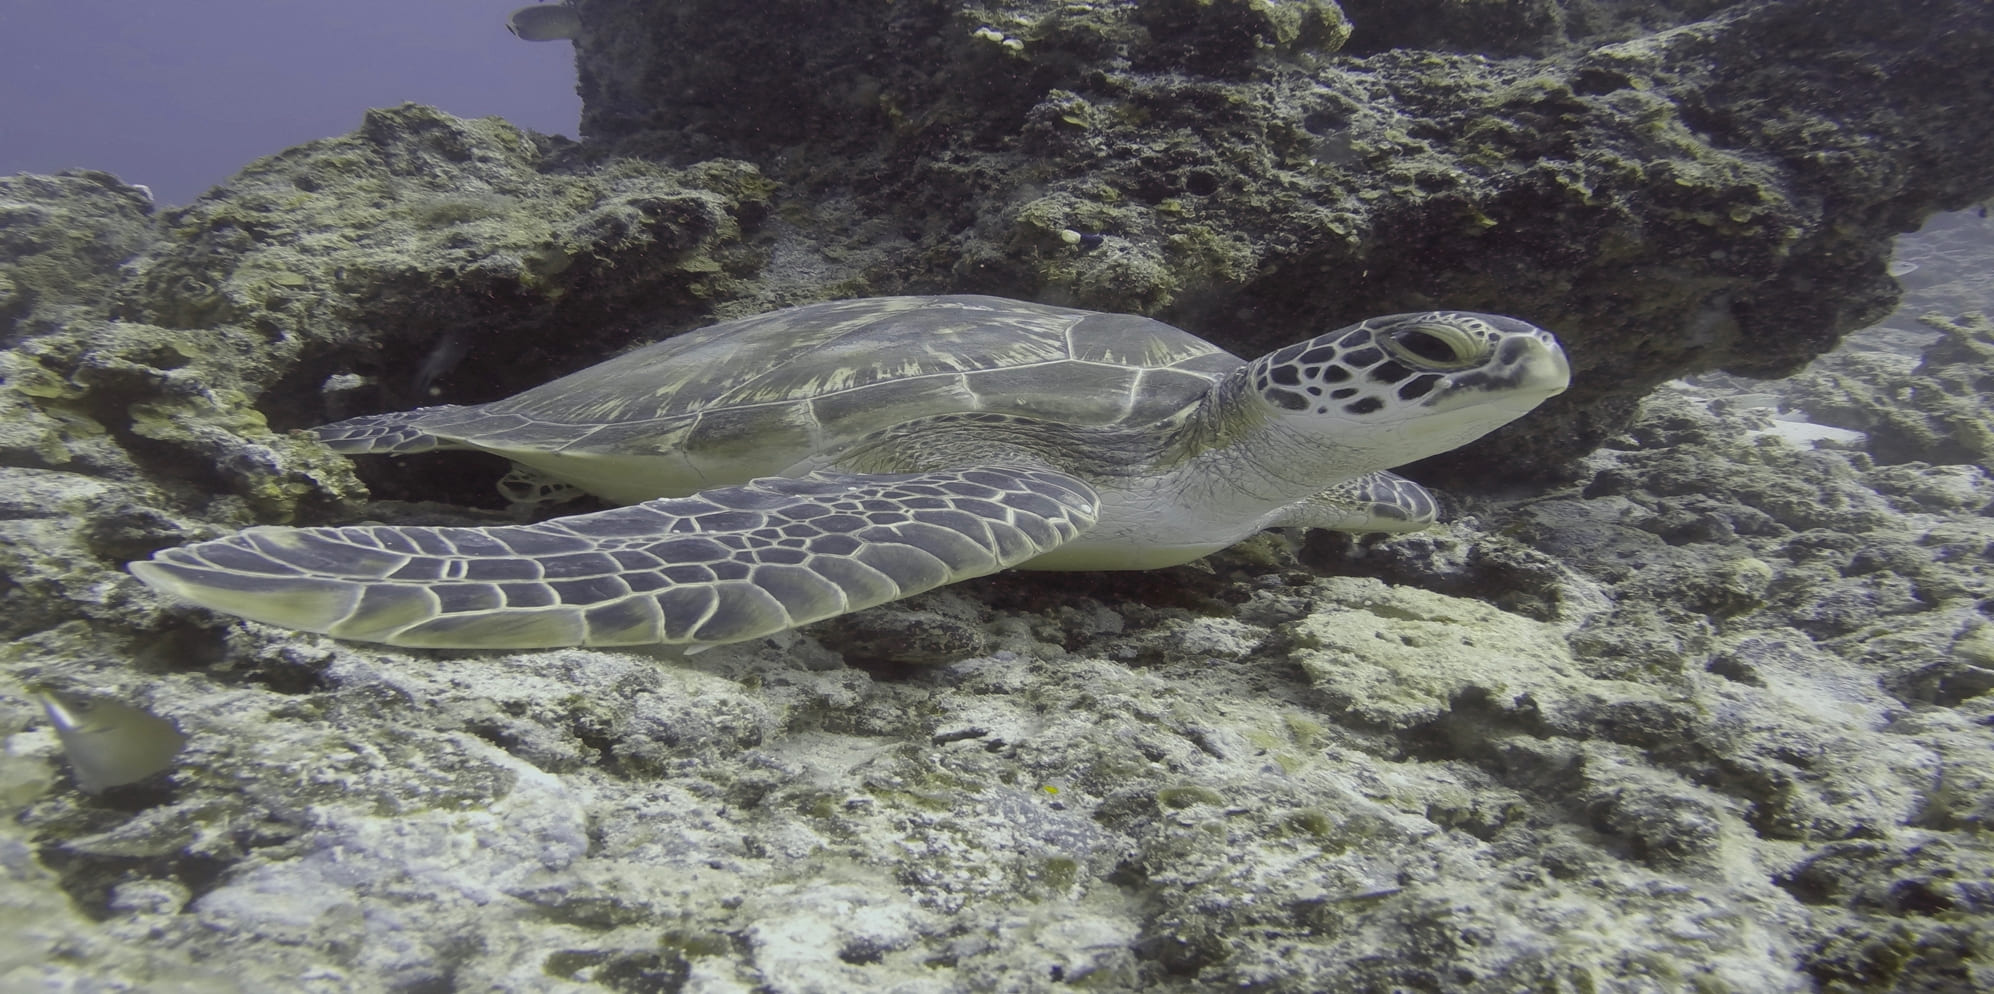 Protect the Sea Turtles in South Tanzania